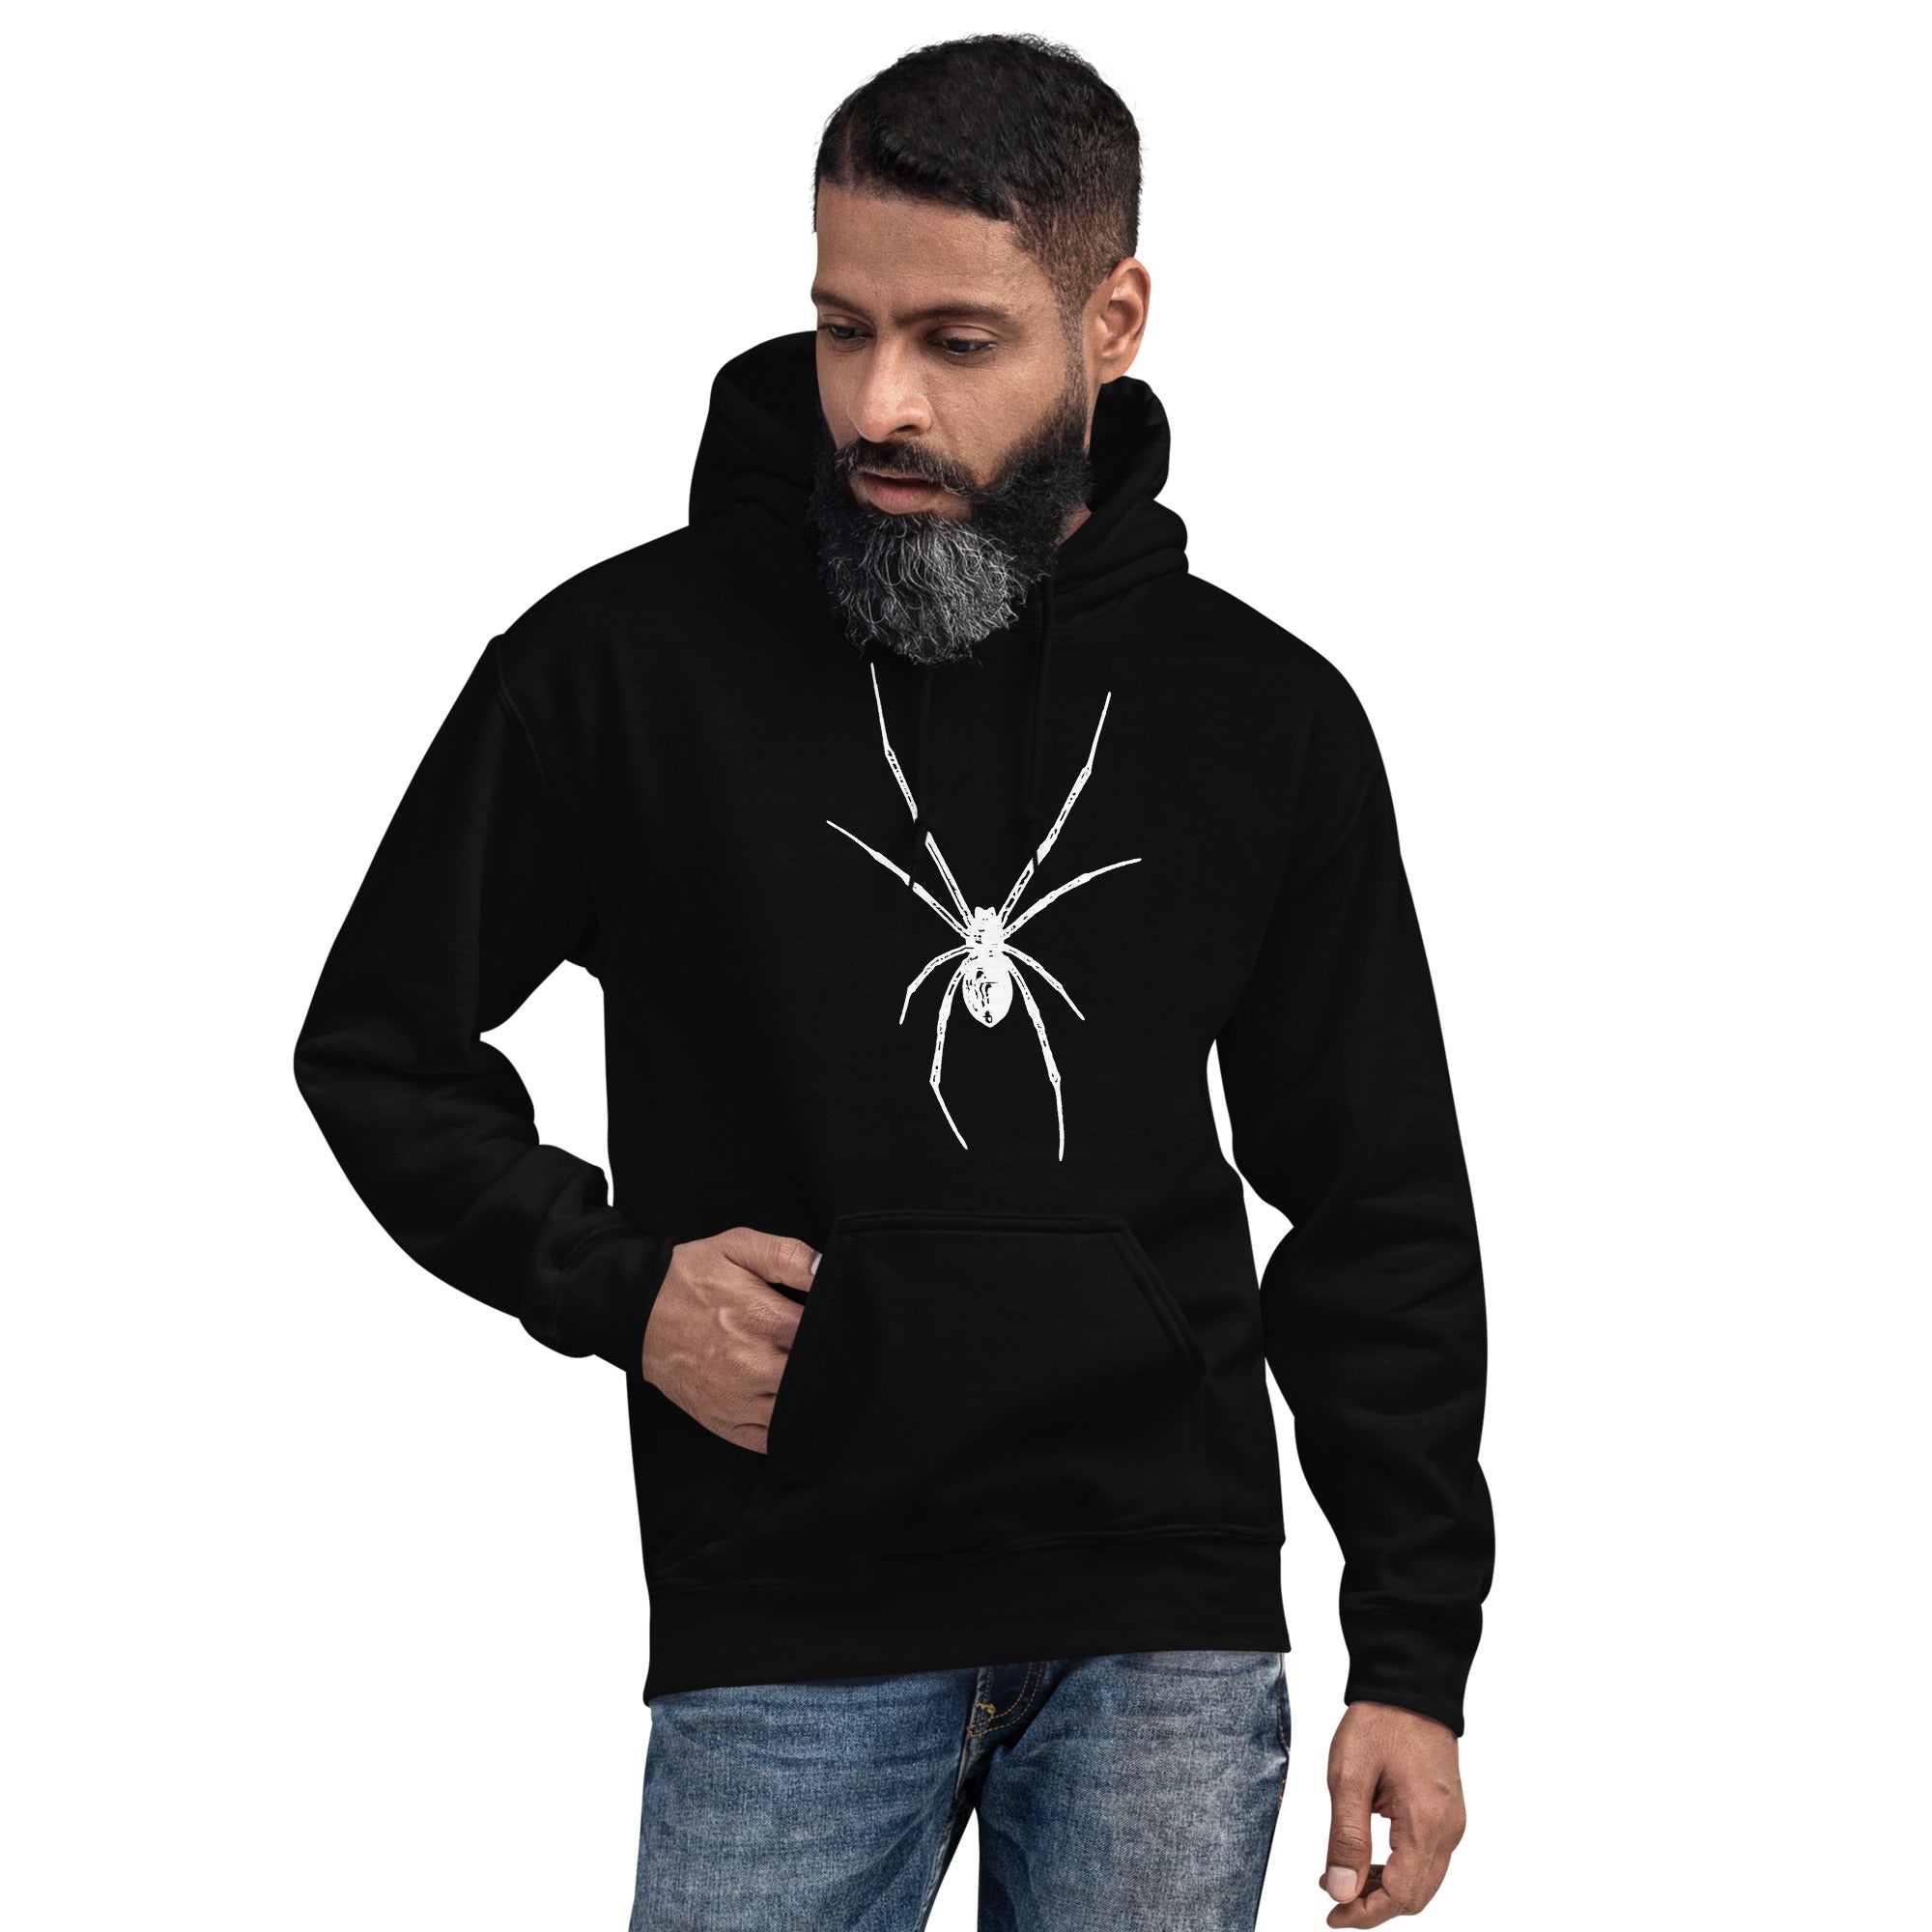 White Creepy Spider Arachnid Black Widow Unisex Hoodie Sweatshirt - Edge of Life Designs